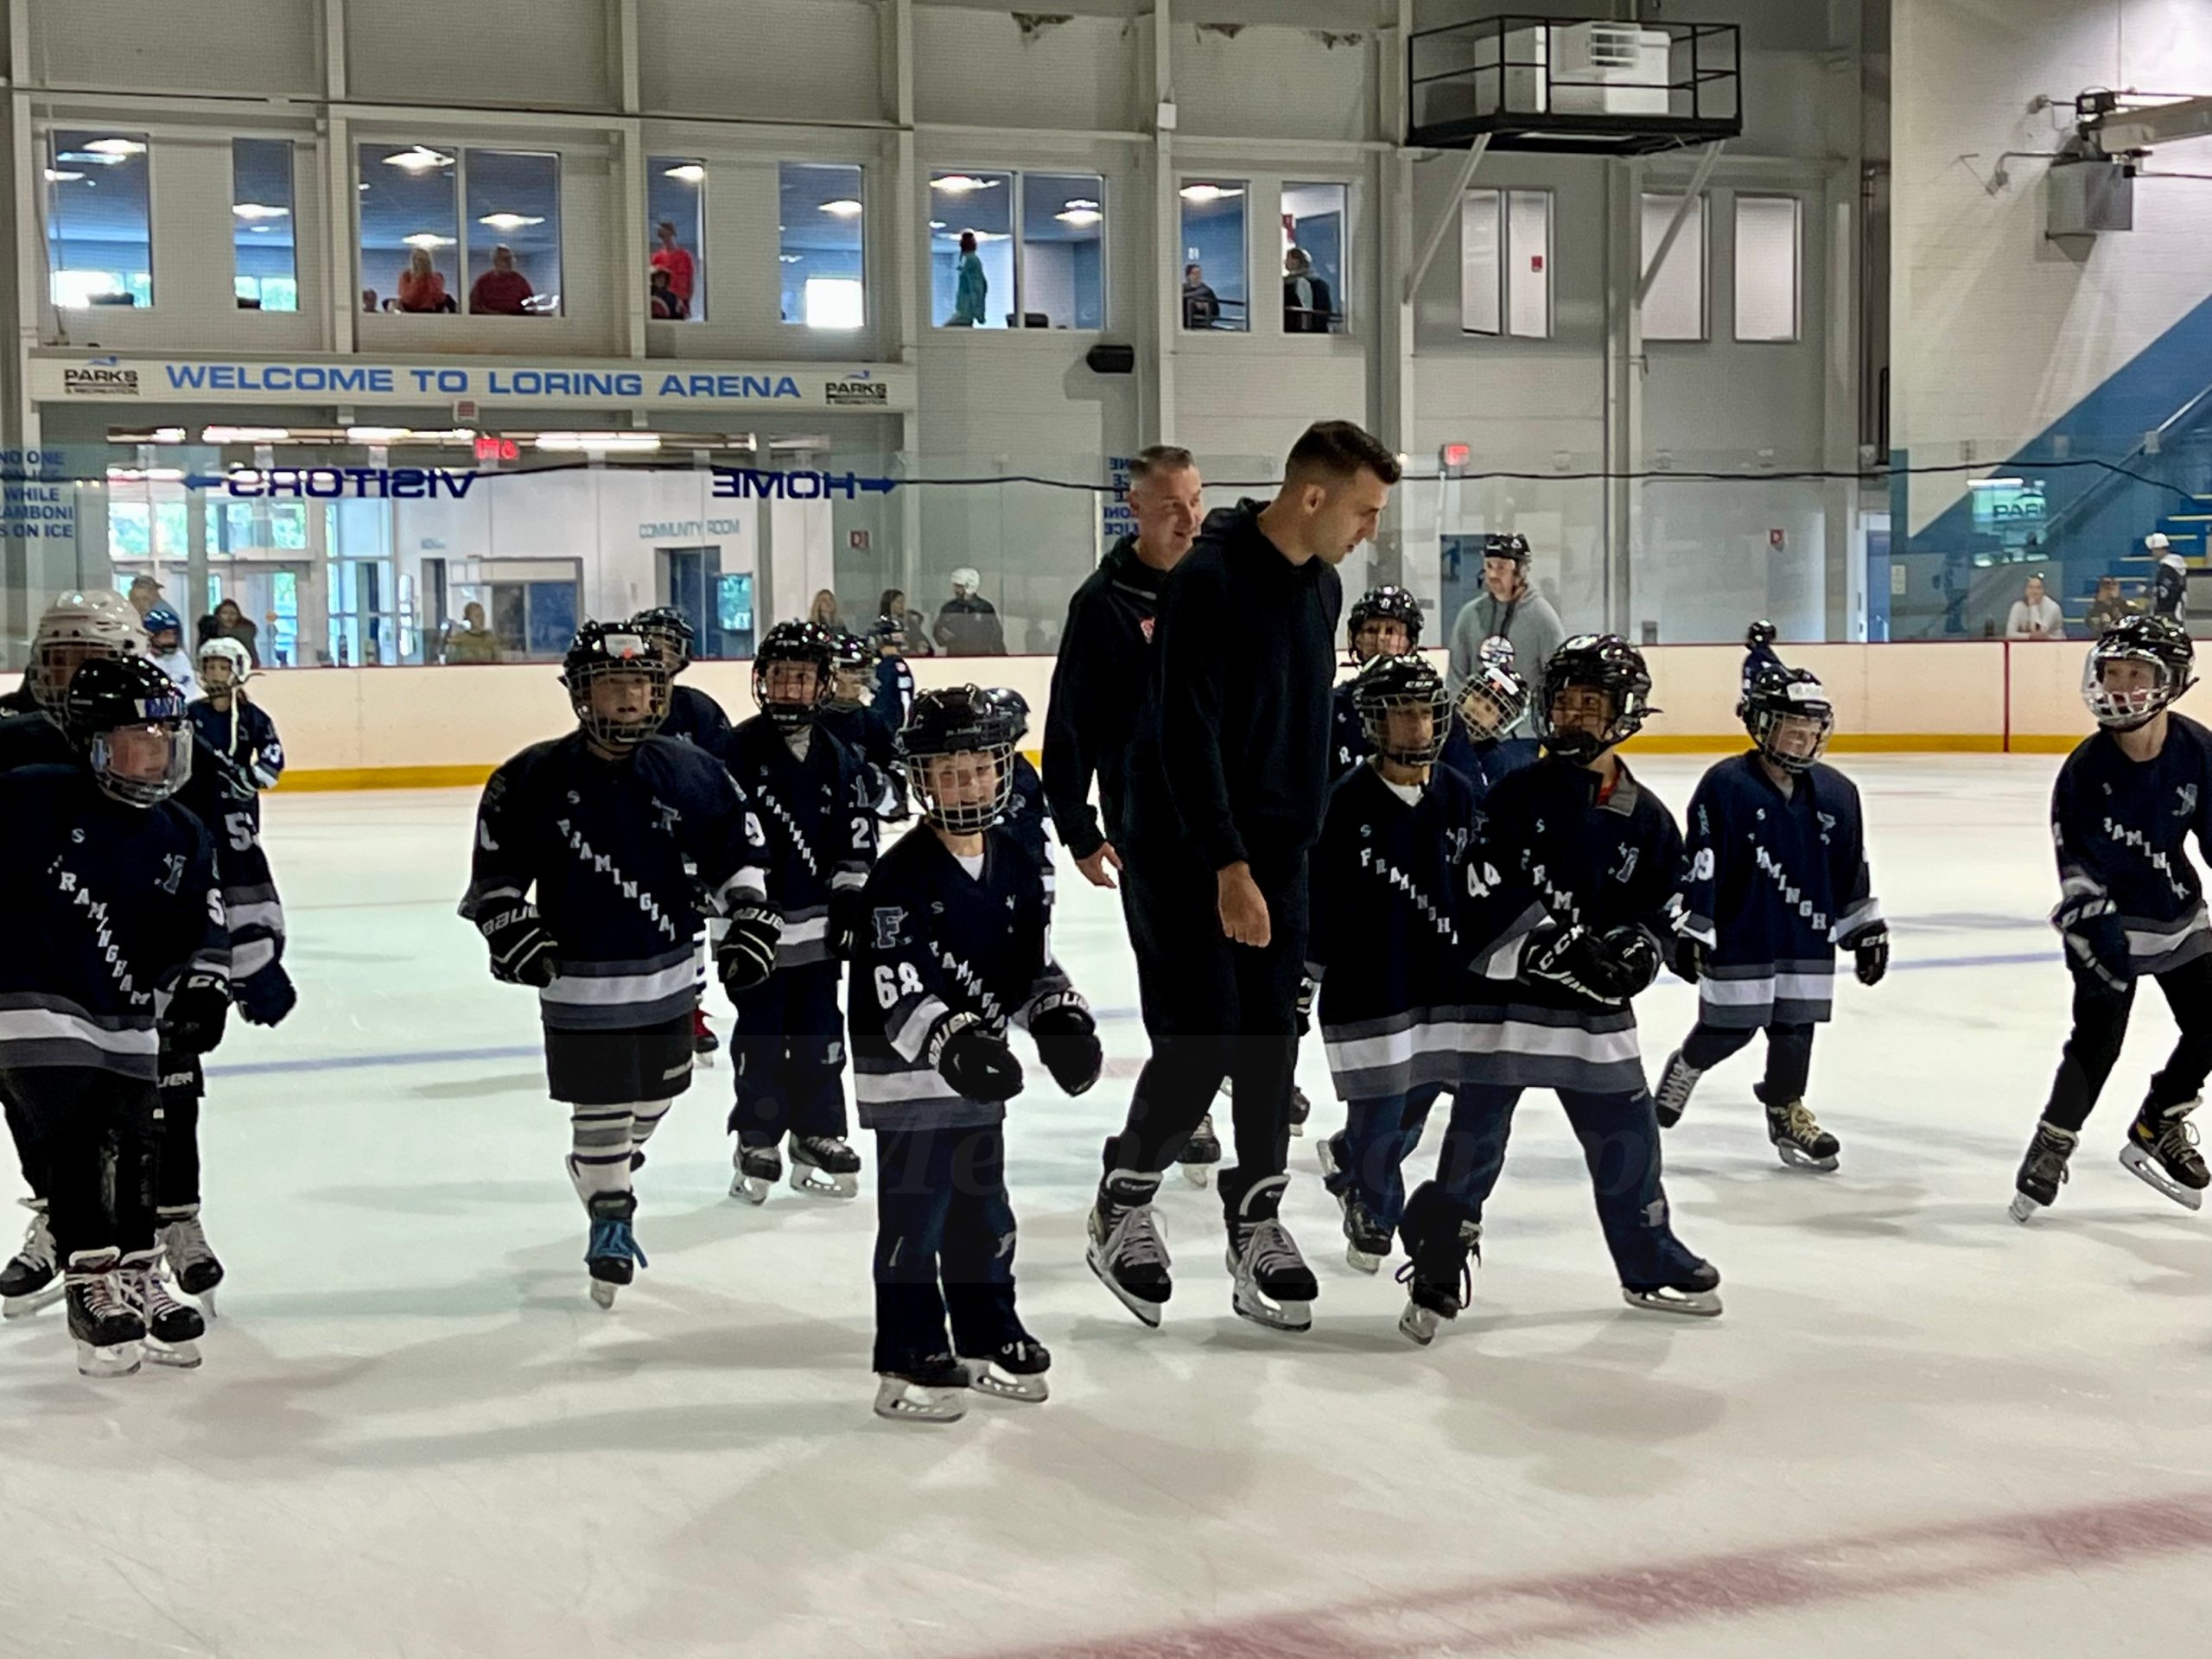 Bruins captain Patrice Bergeron skates with youth players at Loring Arena